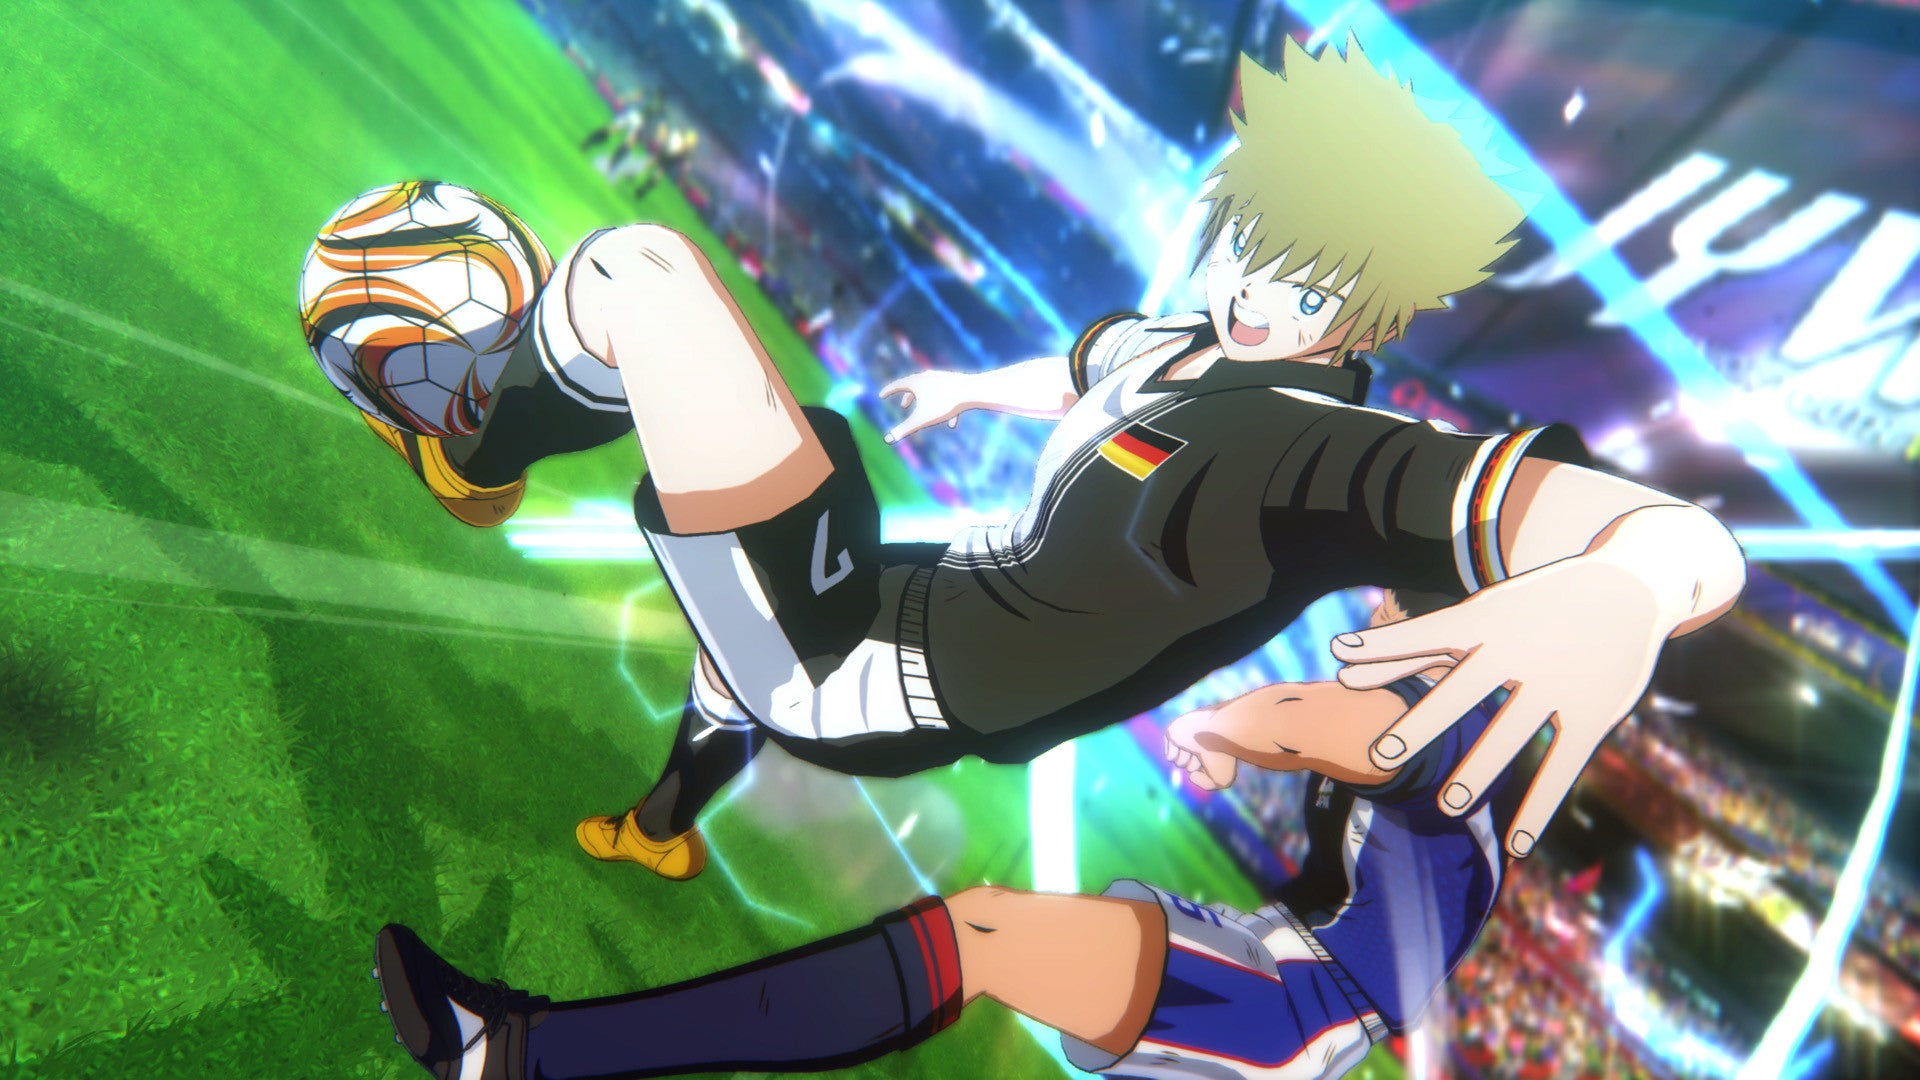 Anime football game Captain Tsubasa out now | Rock Paper Shotgun